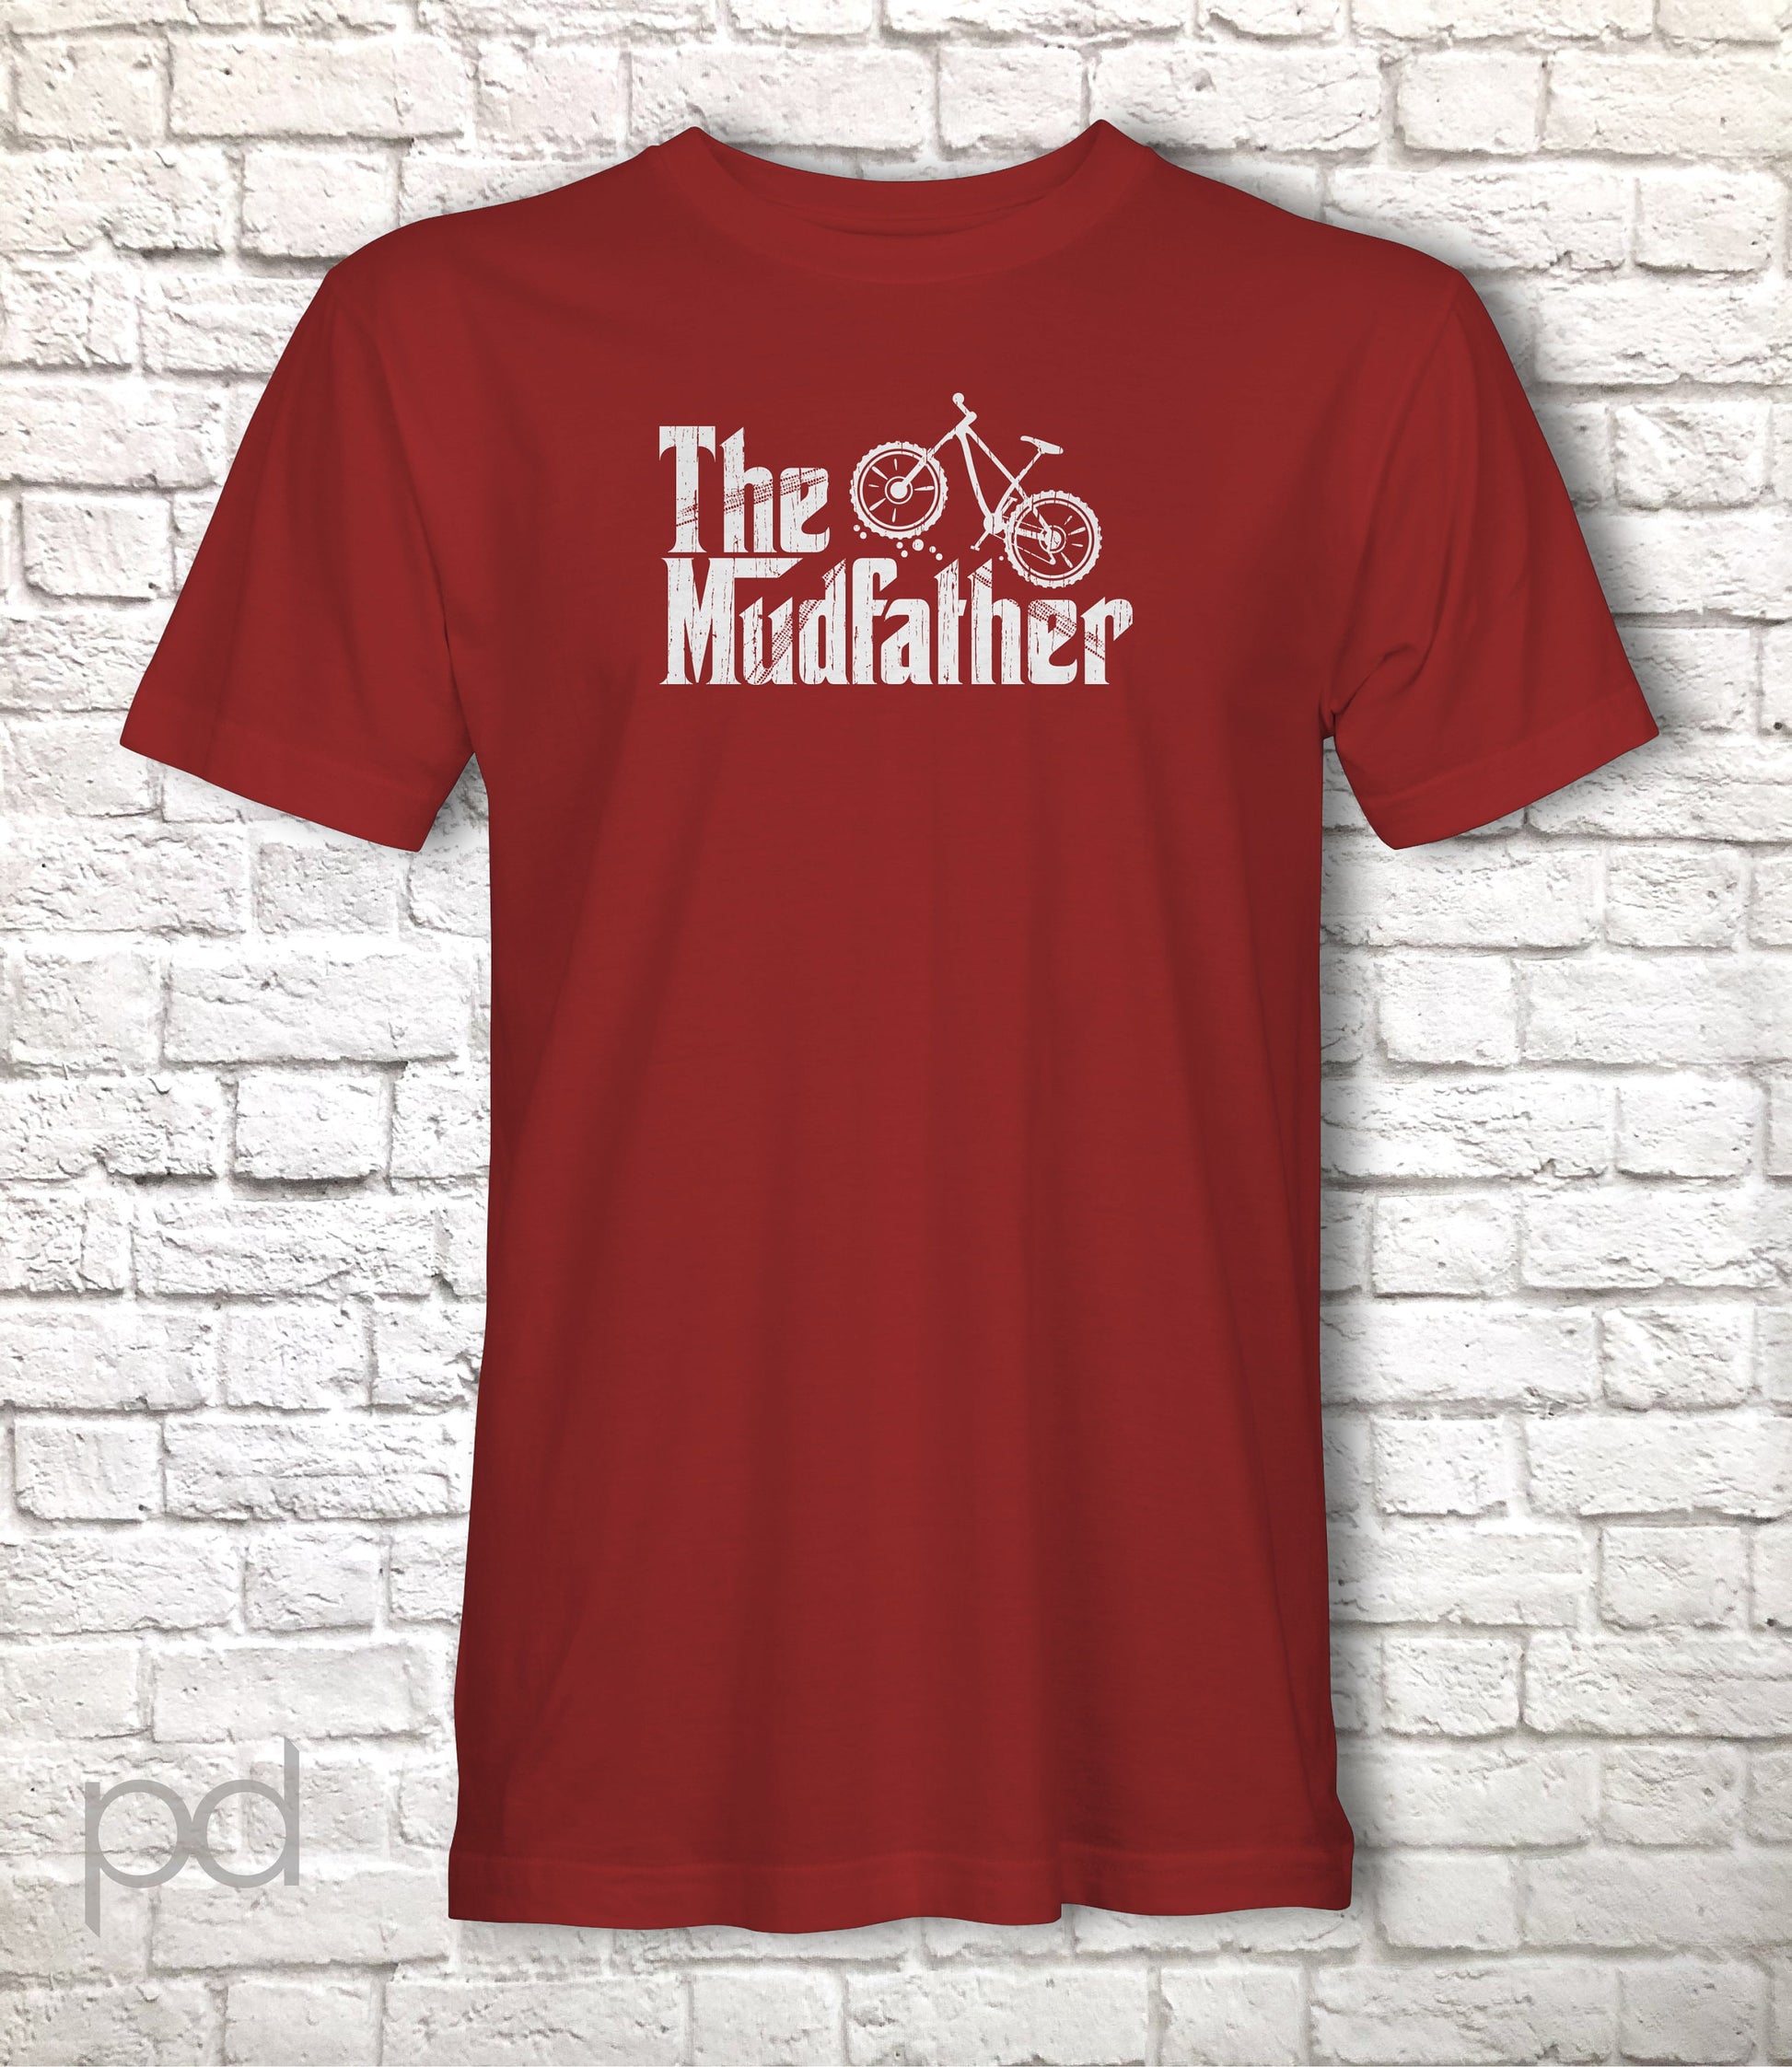 Funny Mountain Biker T-Shirt, Parody The Mudfather Gift Idea, Humorous MTB Downhill Tee Shirt T Top